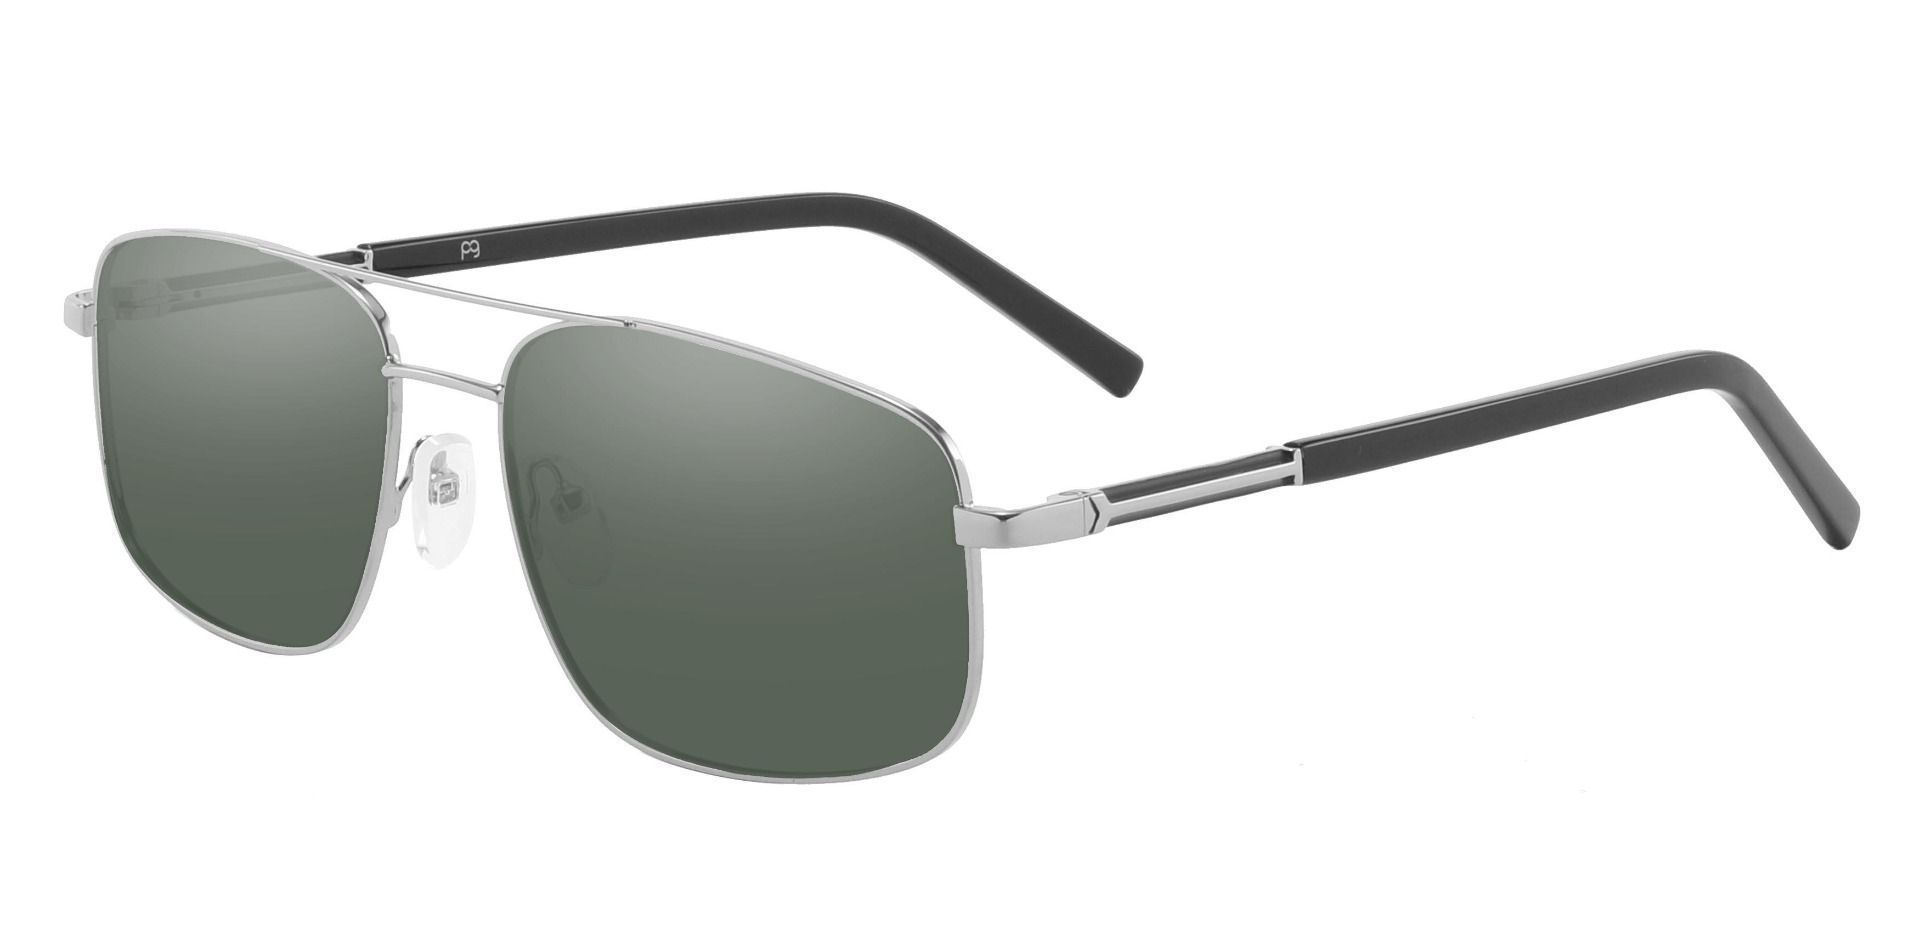 Davenport Aviator Lined Bifocal Sunglasses - Silver Frame With Green Lenses